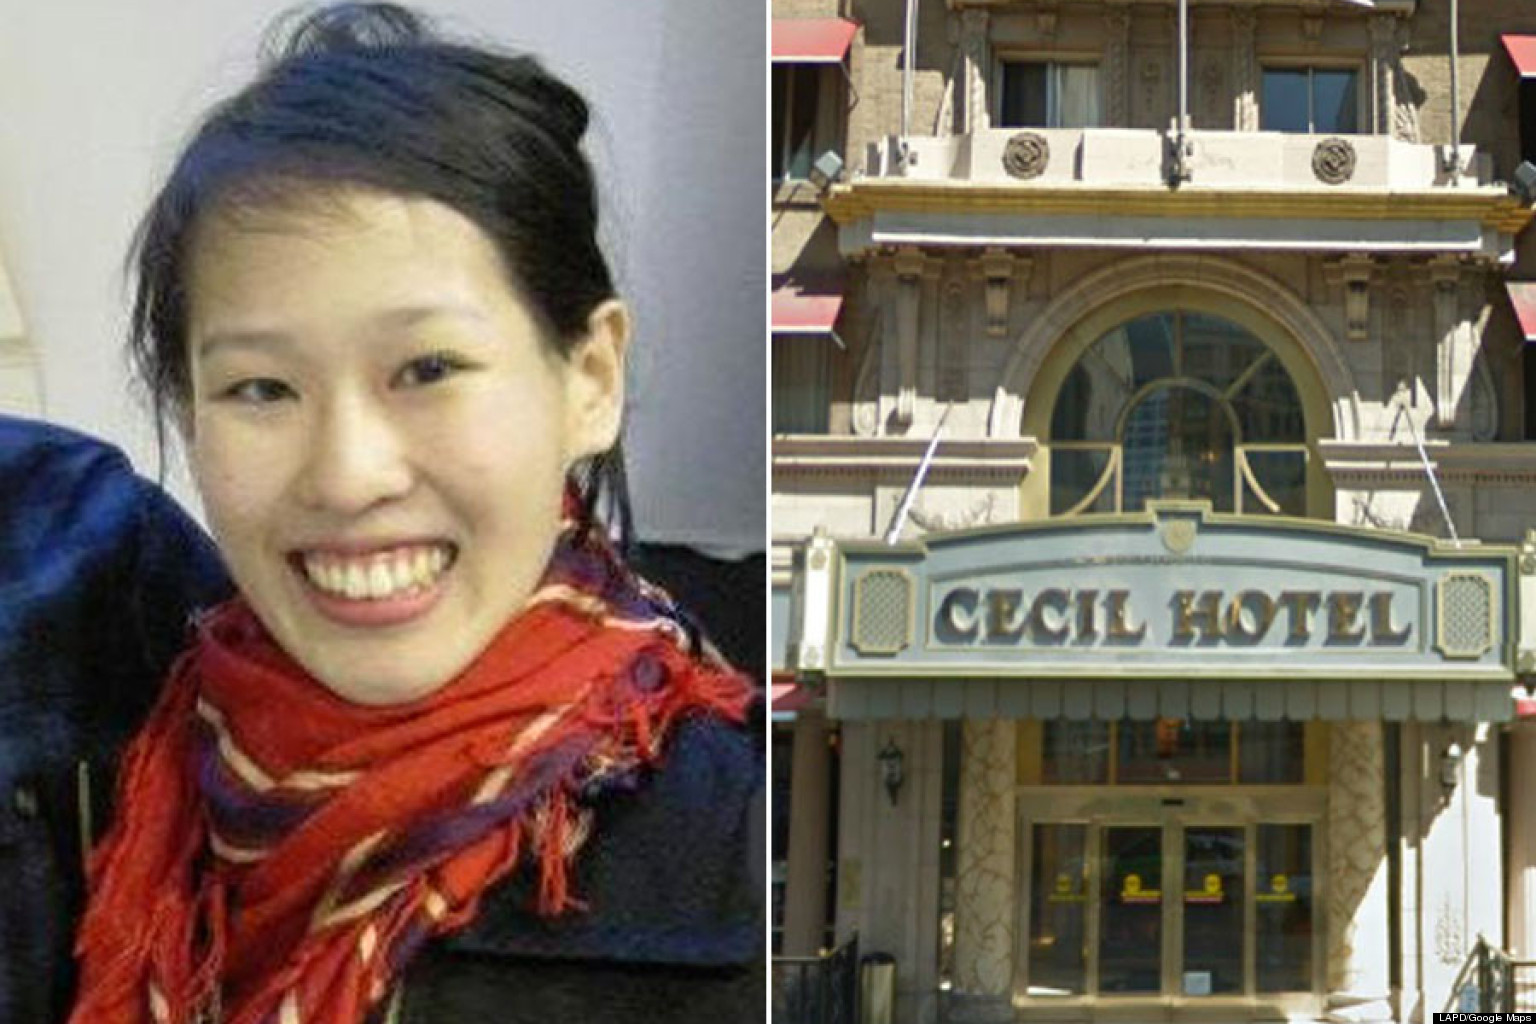 Elisa Lam Case: Cecil Hotel Sued By Guests